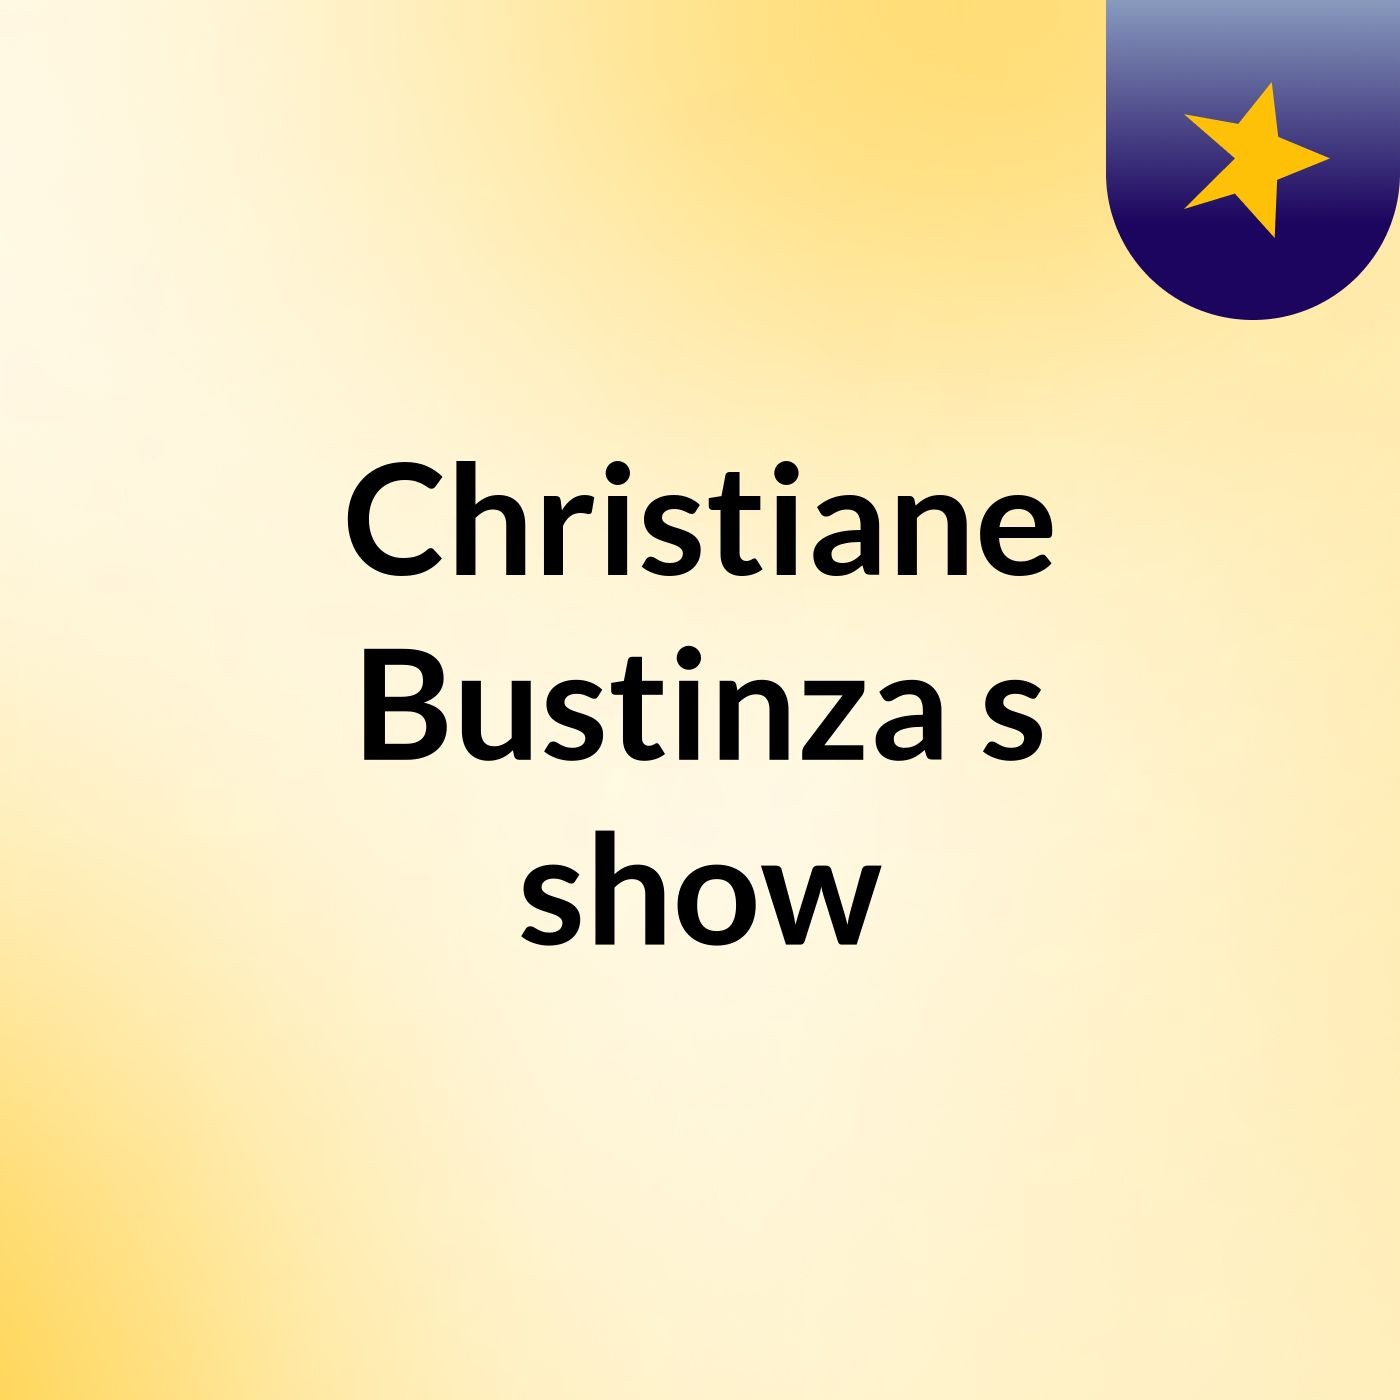 Christiane Bustinza's show